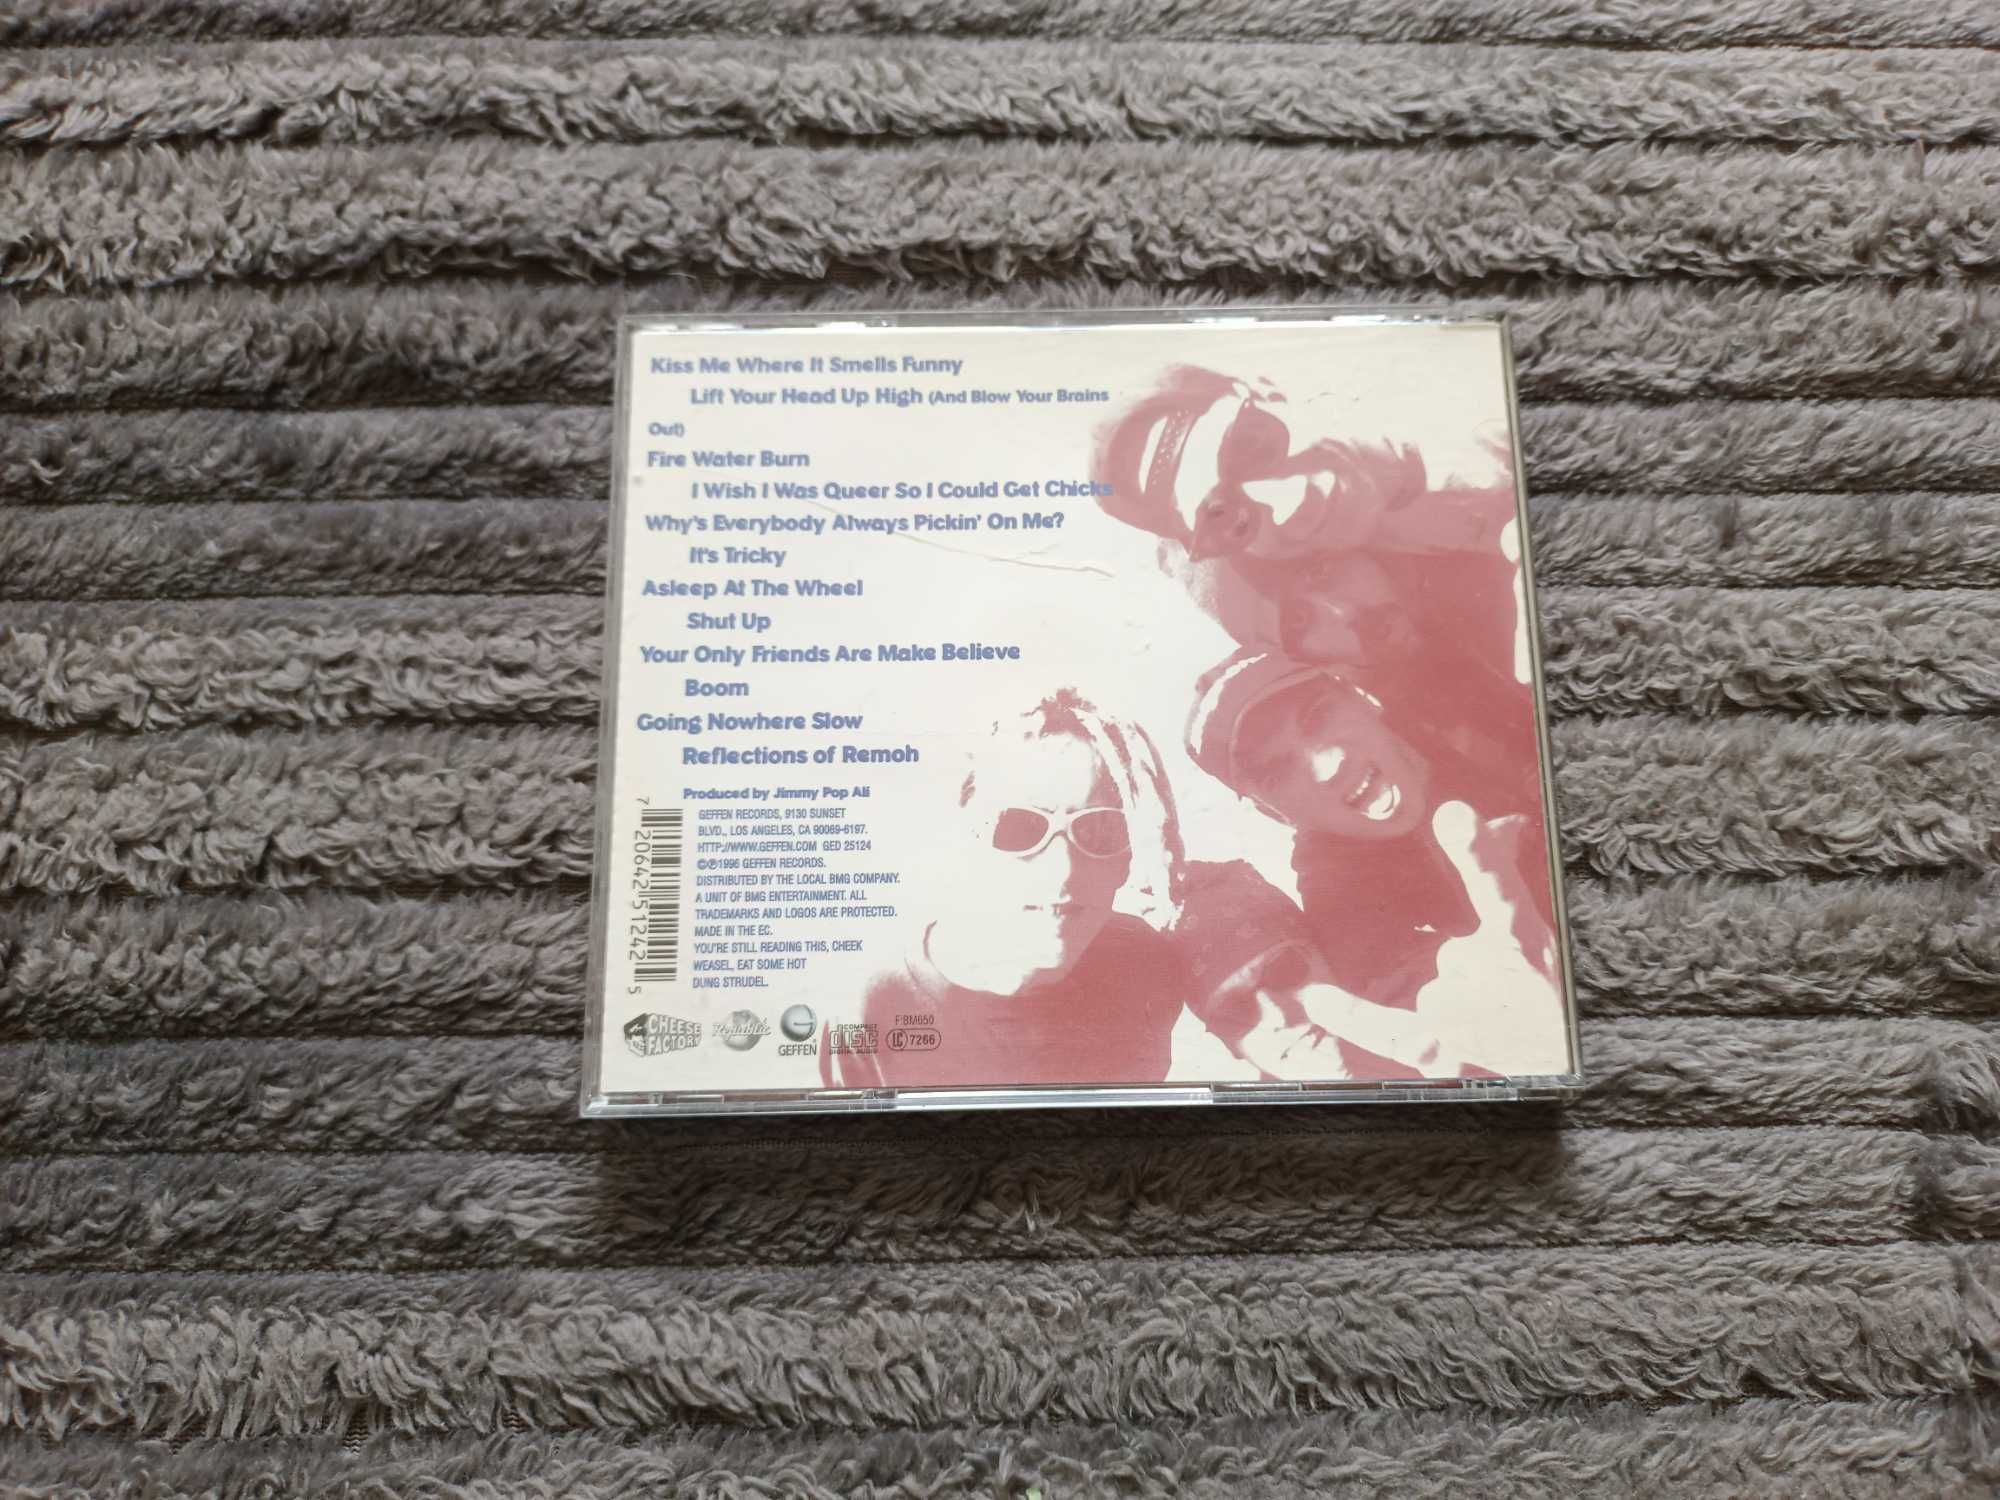 Płyta CD Bloodhound Gang - One Fierce Beer Coaster. Punkrock